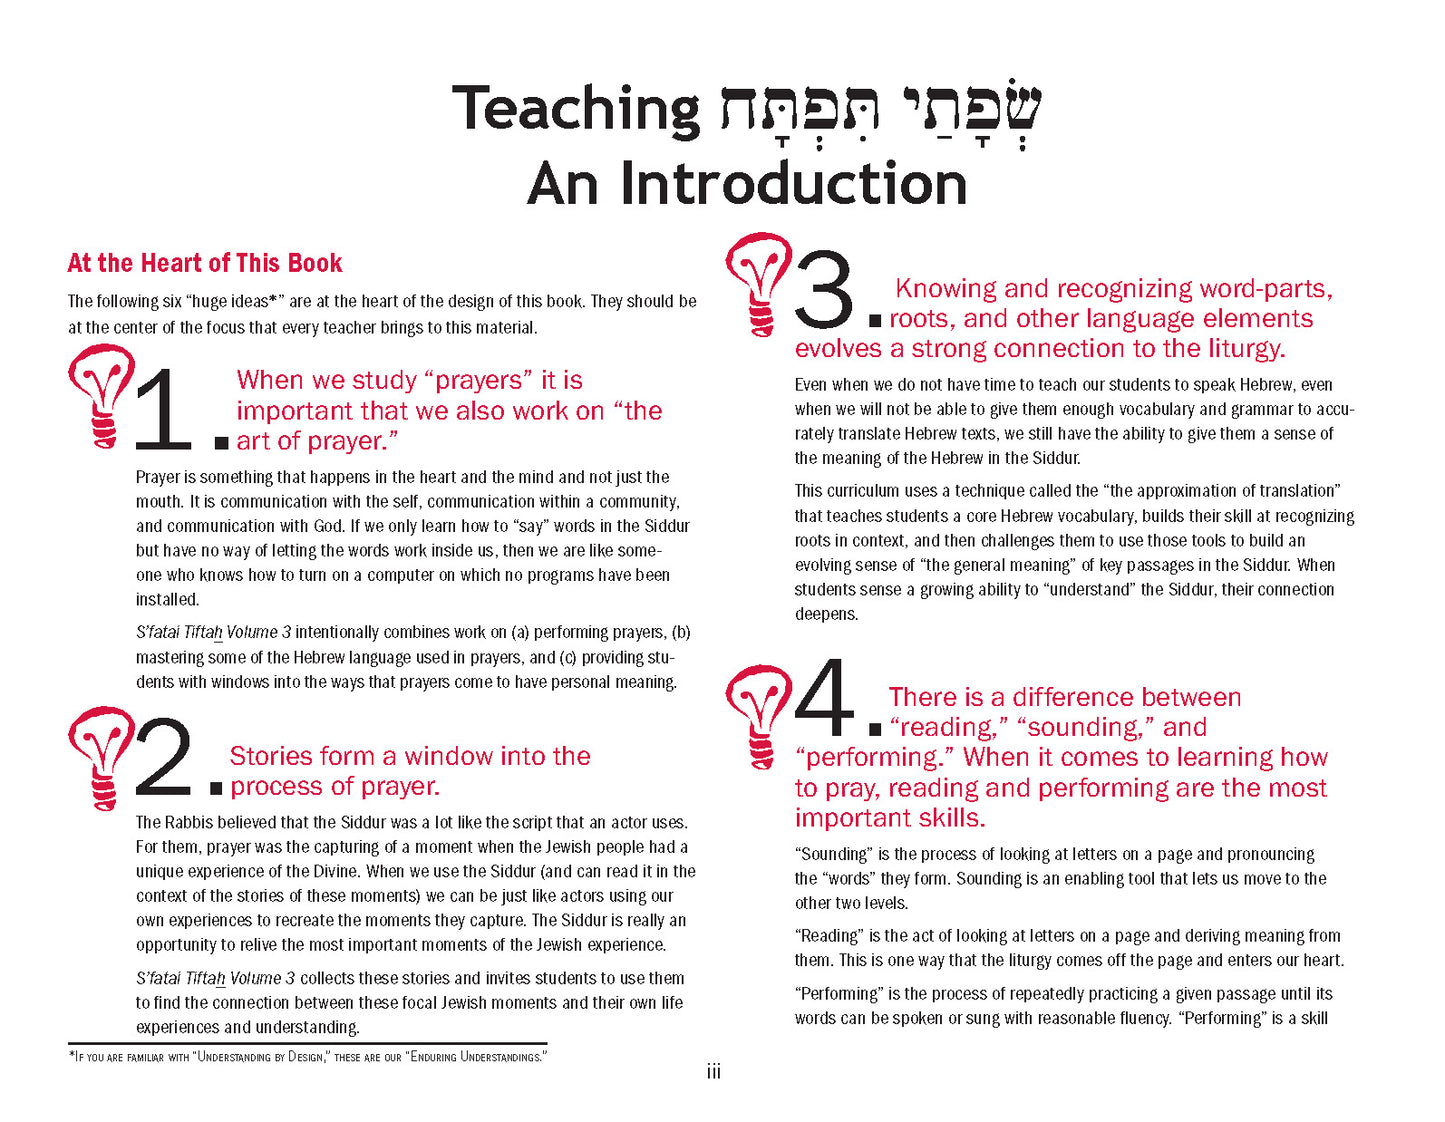 S'fatai Tiftah: Siddur Mastery & Meaning Volume 3 Teacher Guide